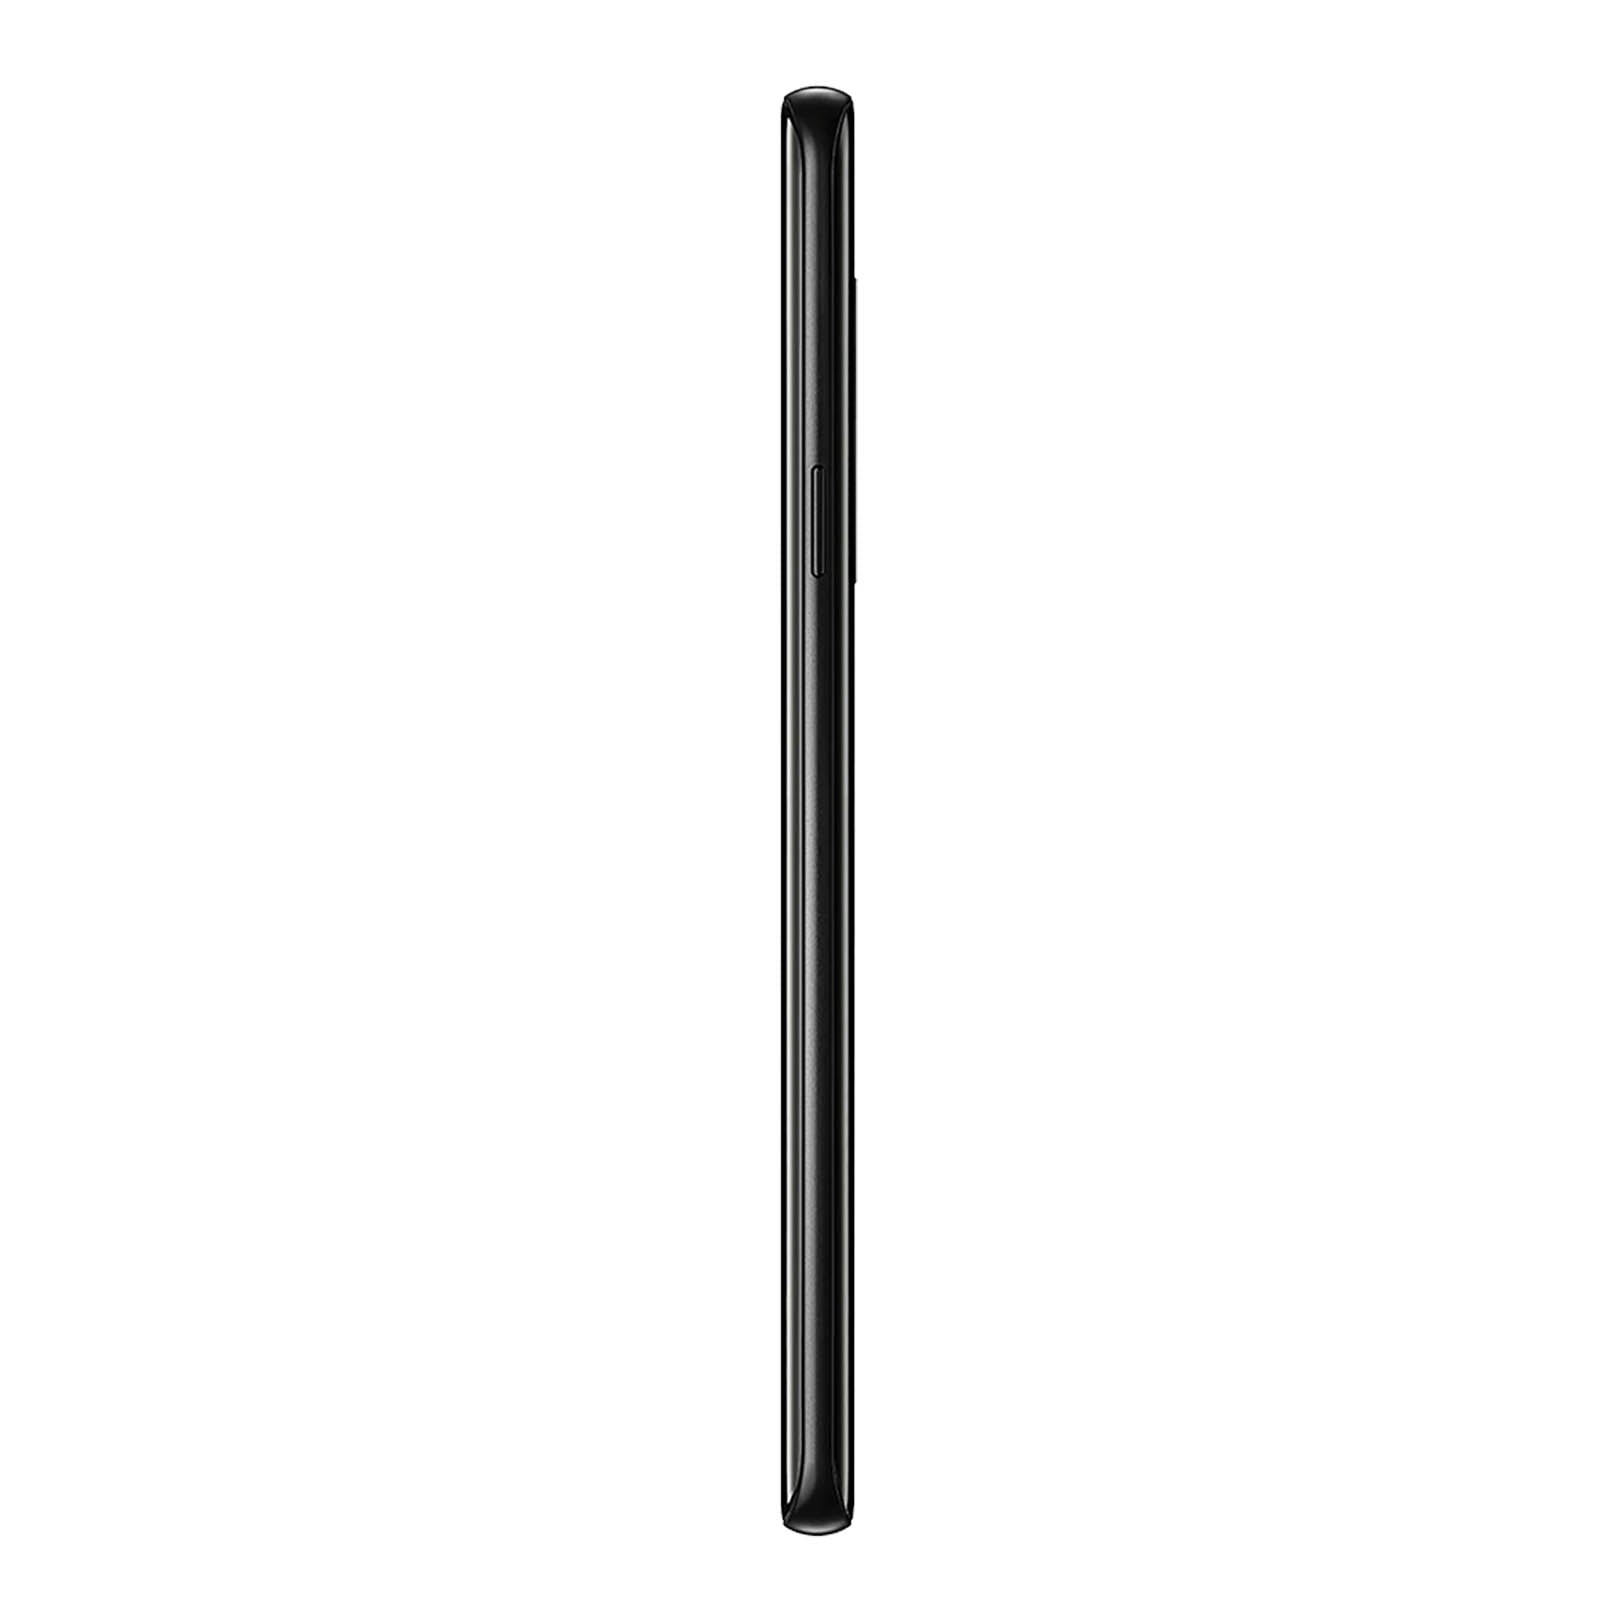 Samsung Galaxy S9 Plus 256GB Black Pristine - Unlocked